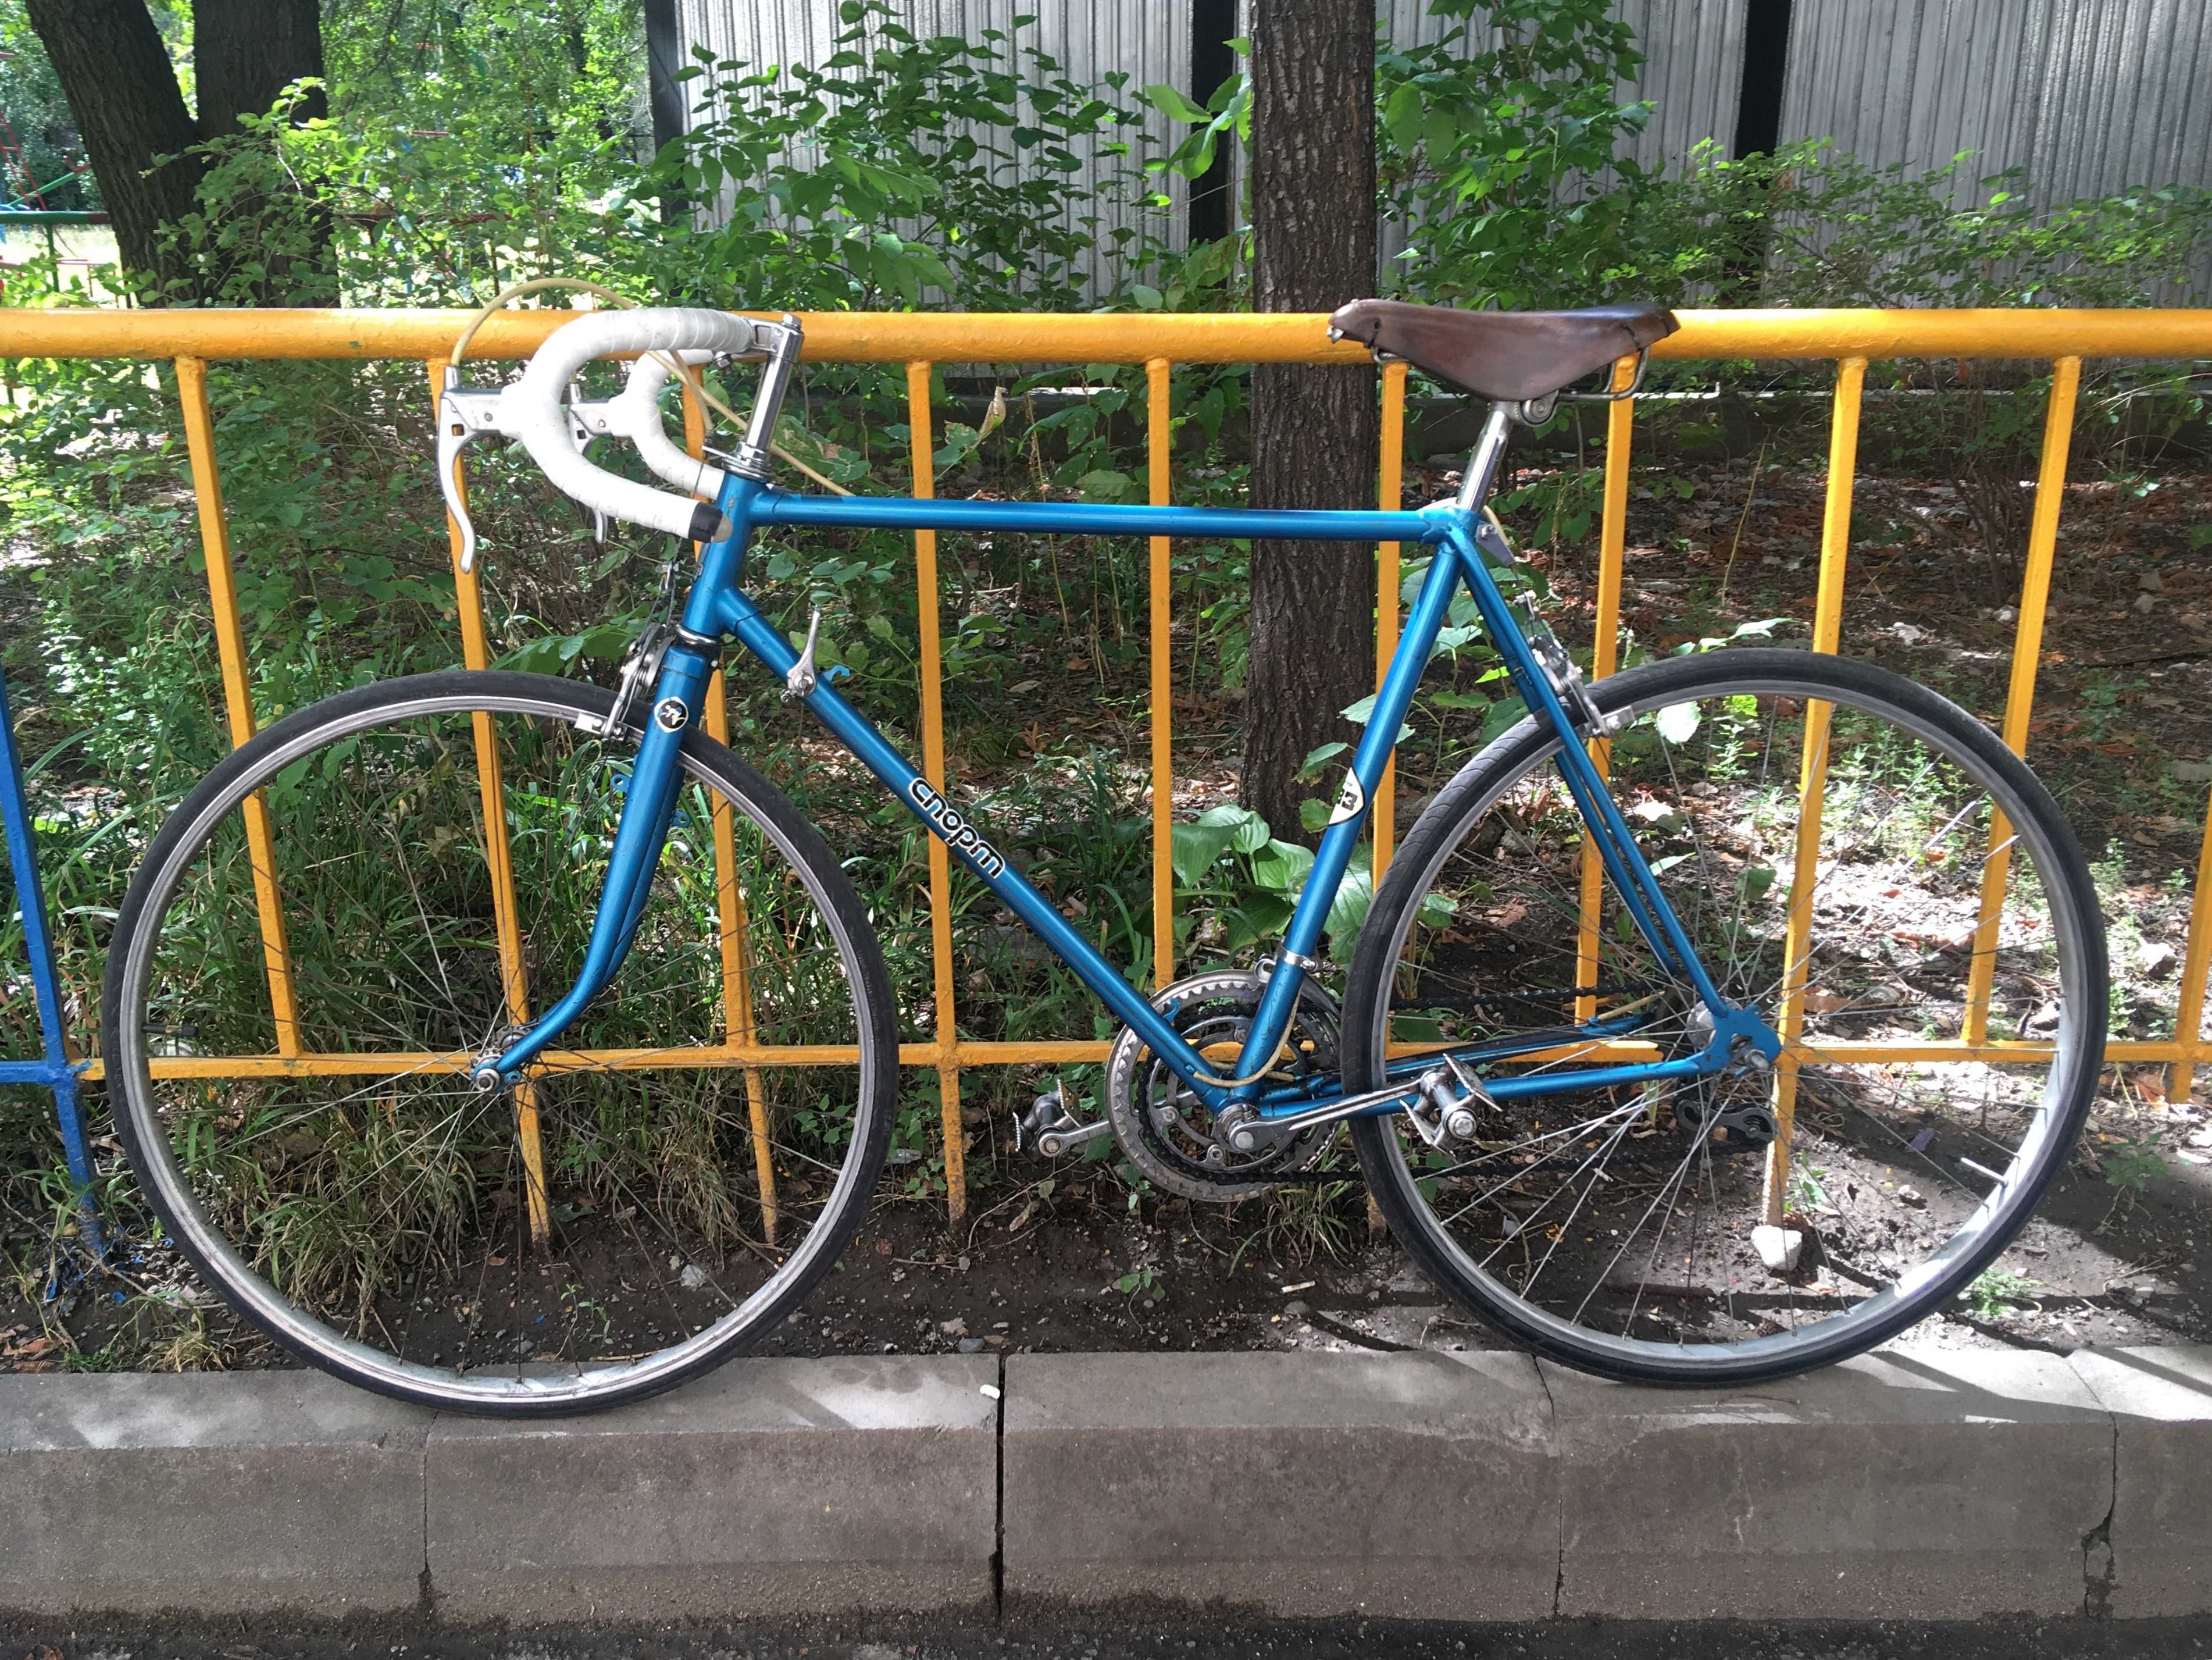 Велосипед ХВЗ, 1987 г., голубого цвета